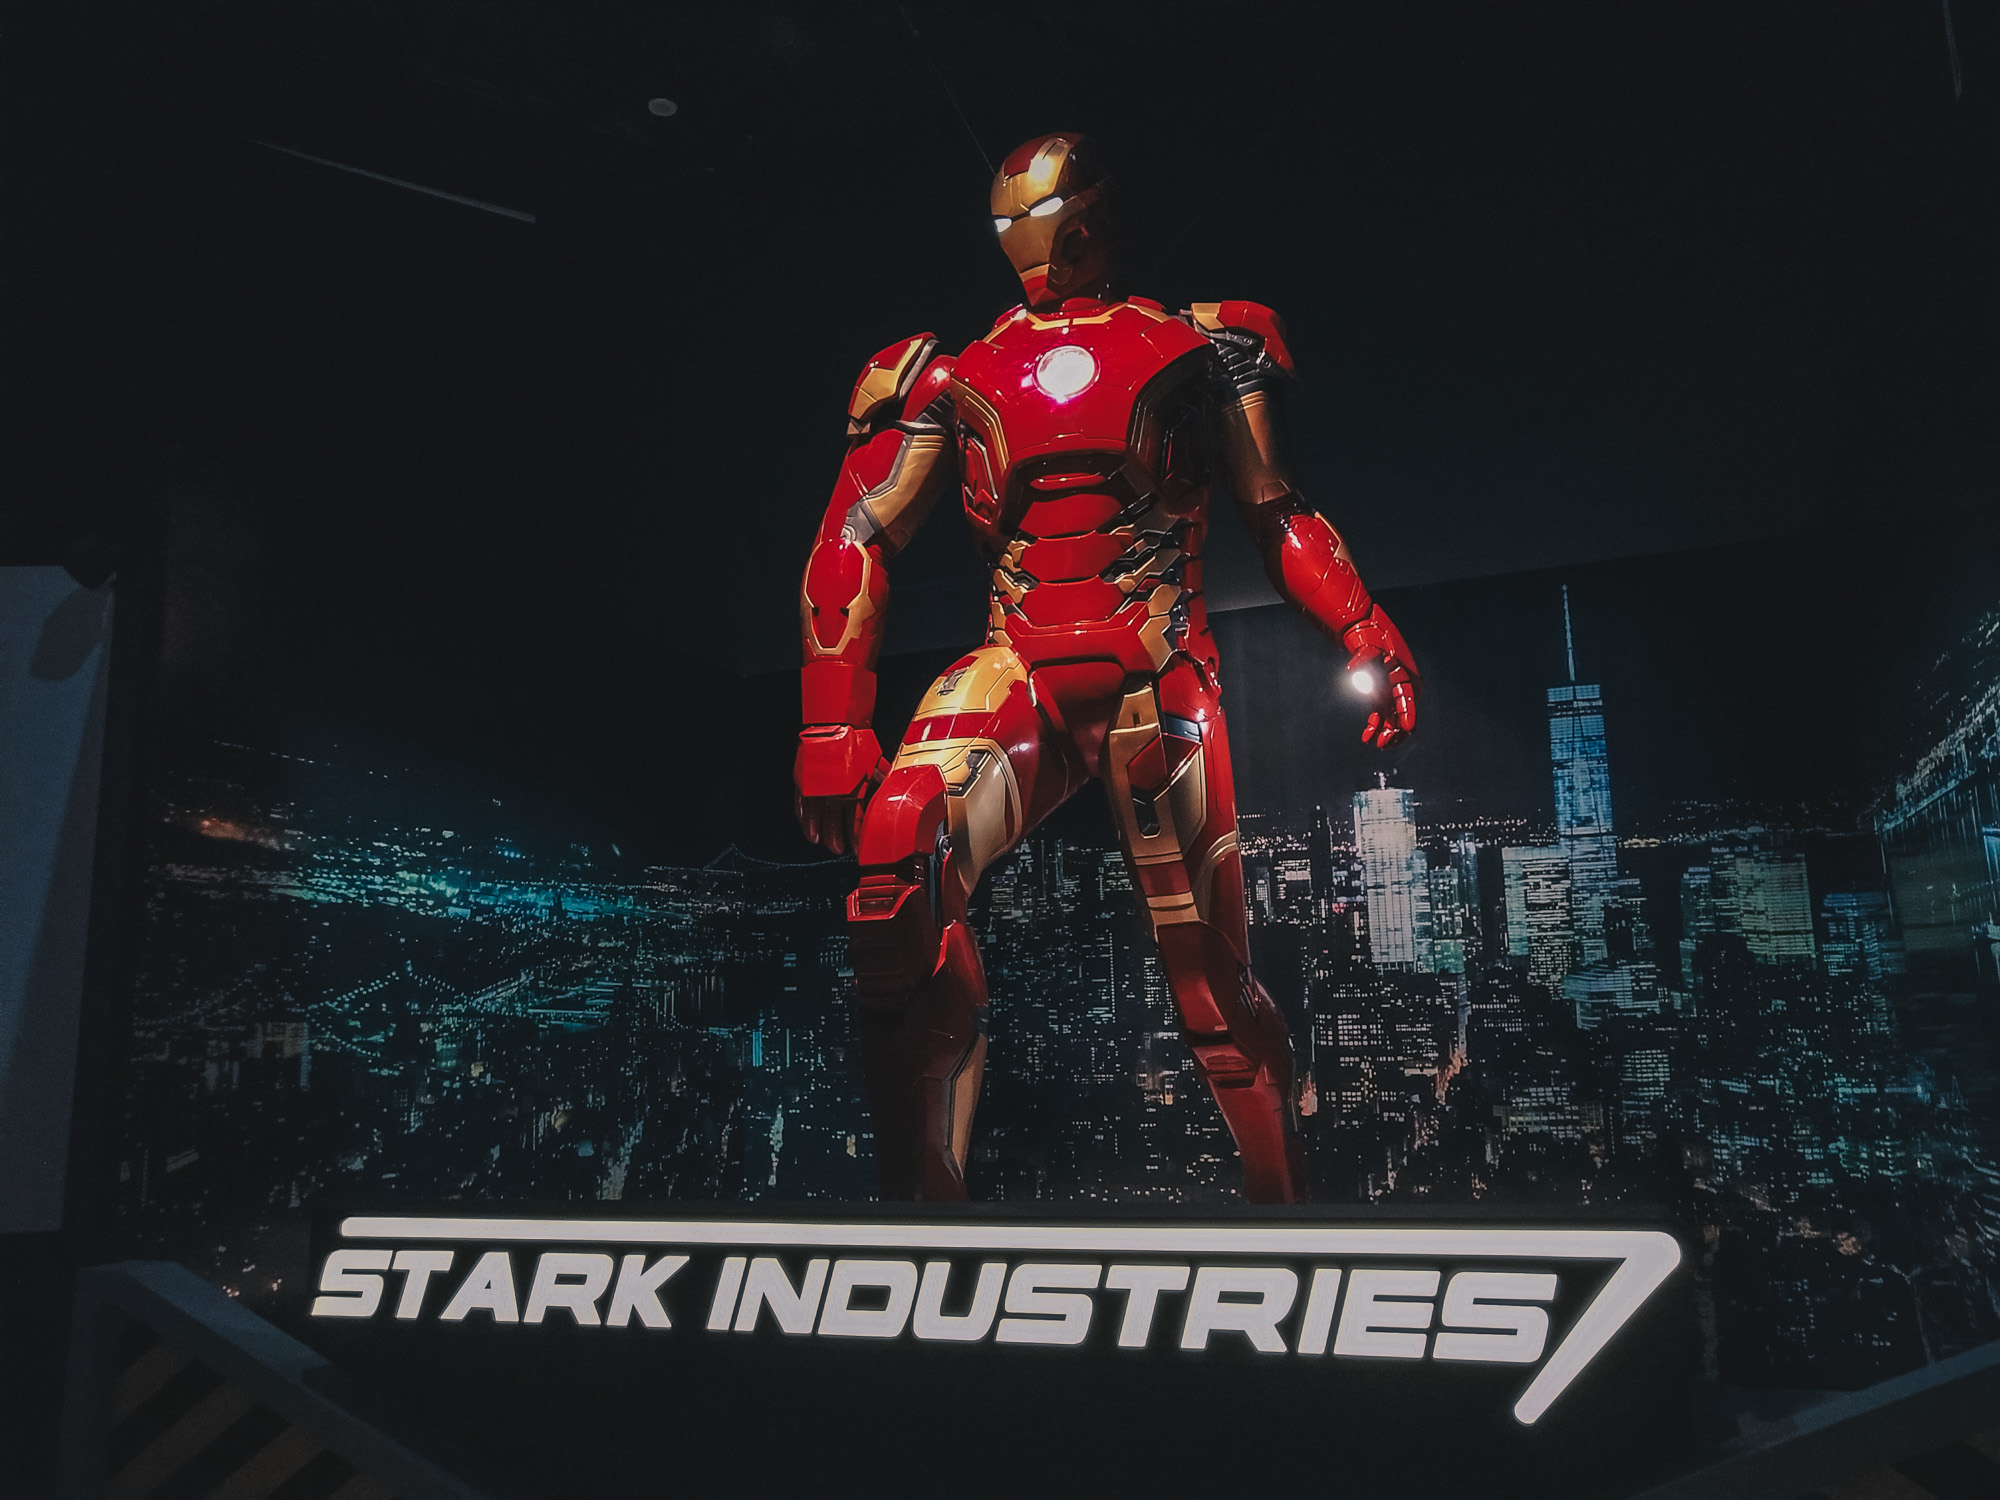 Marvel Studios: Ten Years of Heroes Exhibition Opens in Singapore